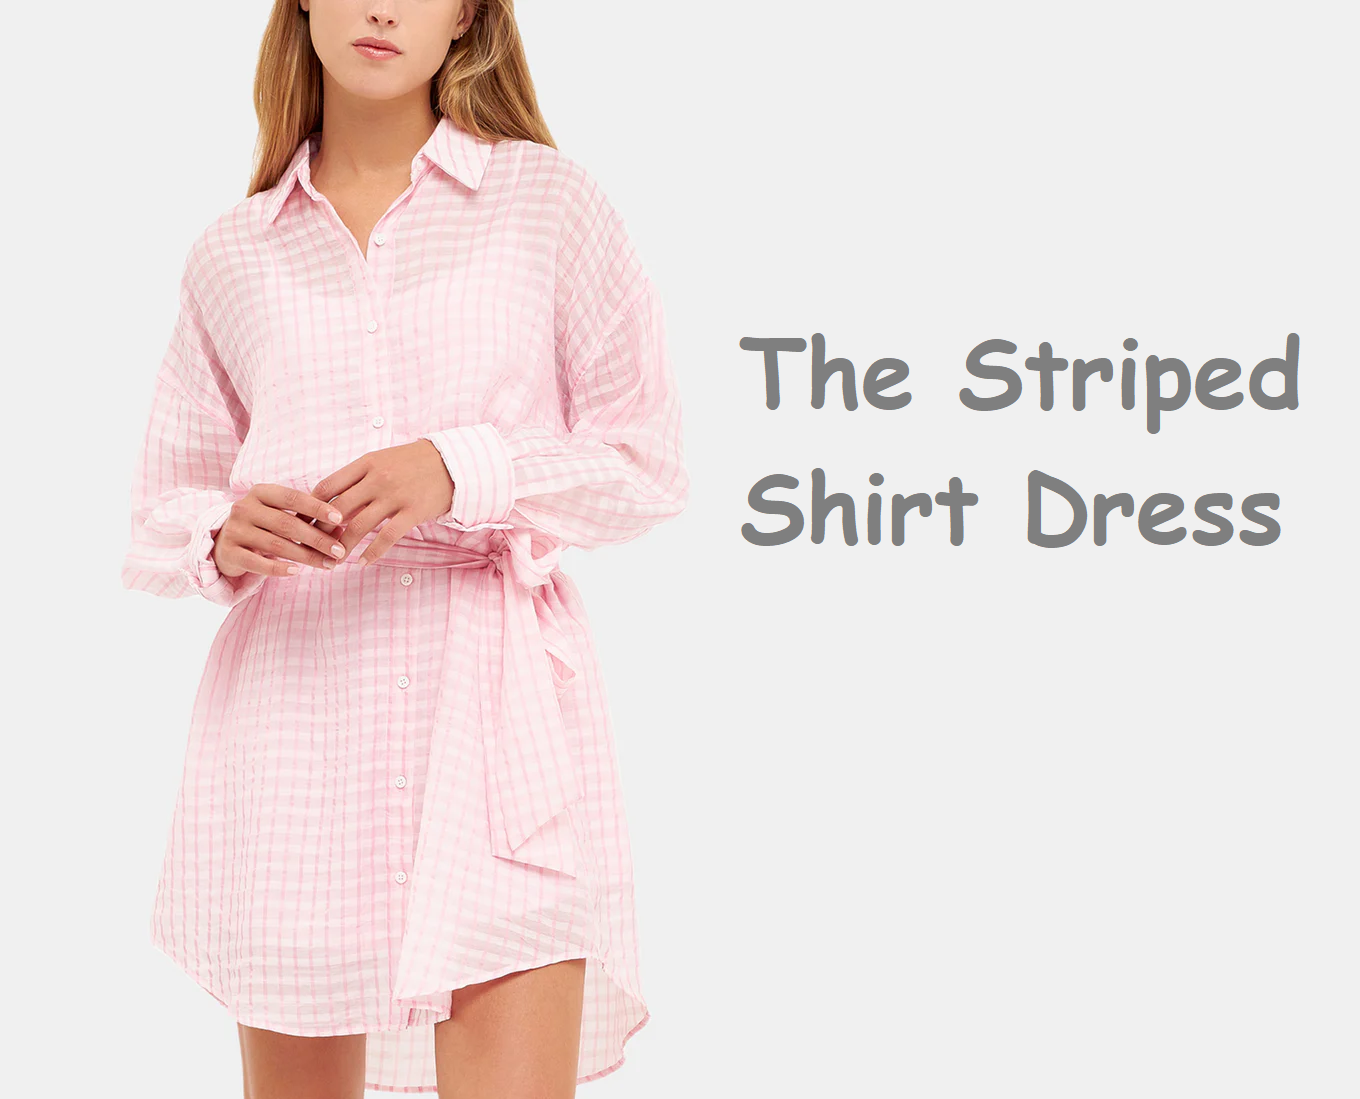 The stripped shirt dress